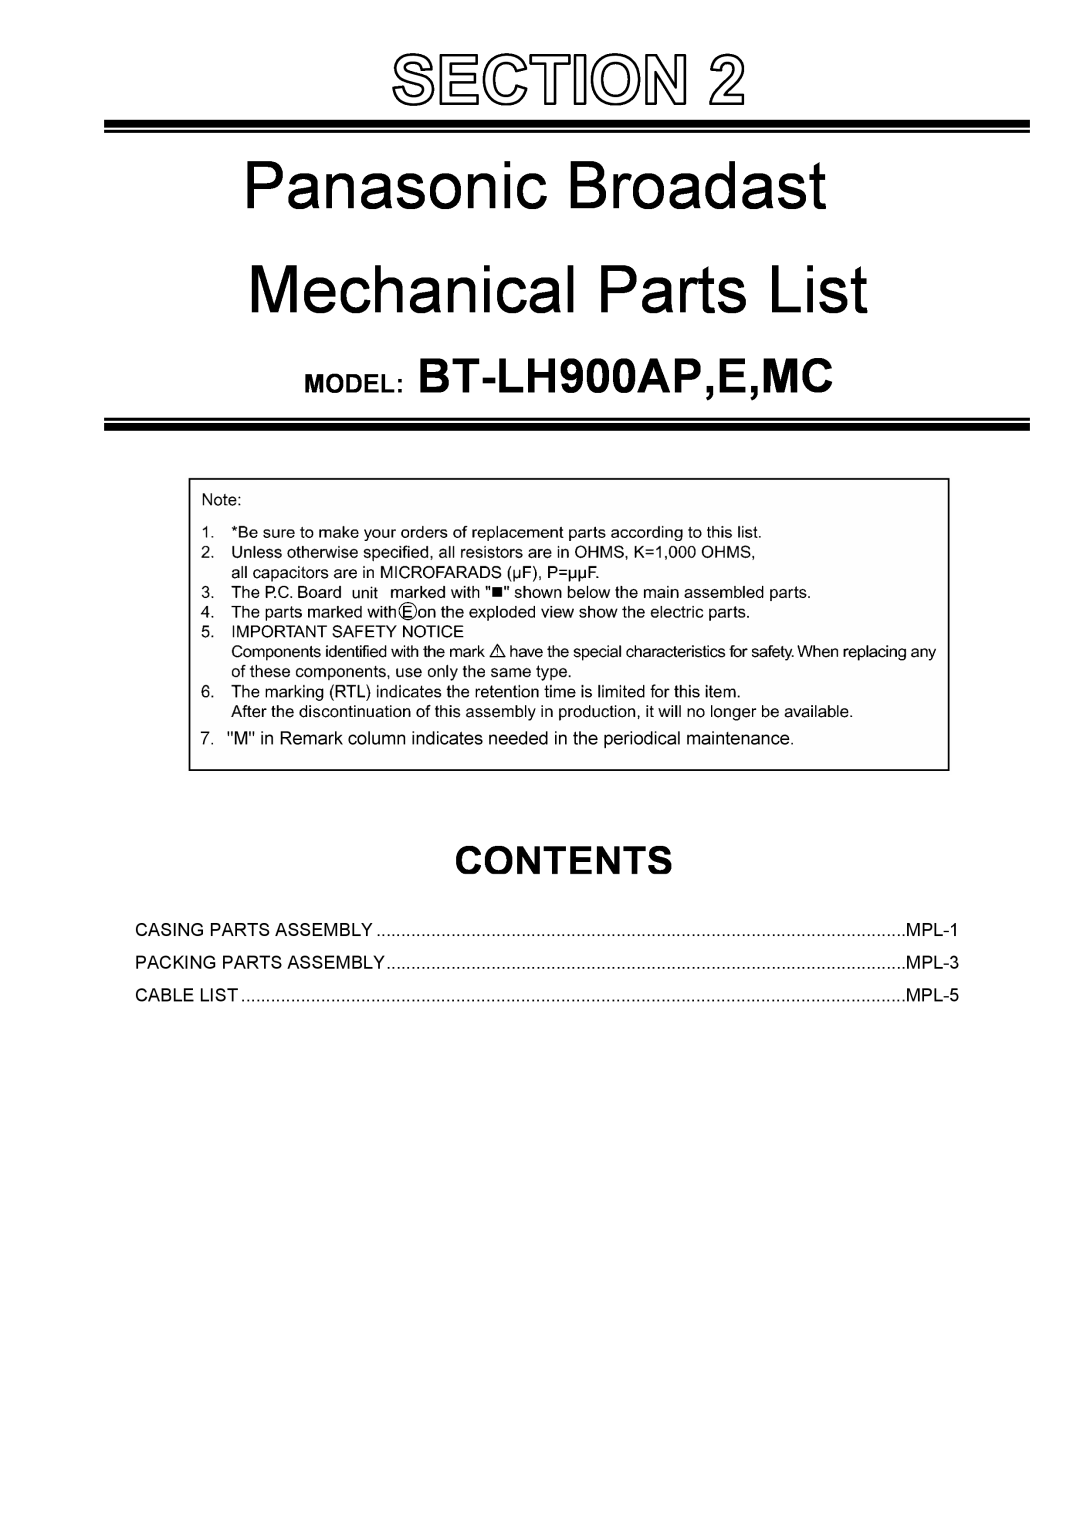 Panasonic BT-LH900MC manual MPL-1, MPL-3, MPL-5, Panasonic Broadast Mechanical Parts List, MODEL BT-LH900AP,E,MC, Contents 